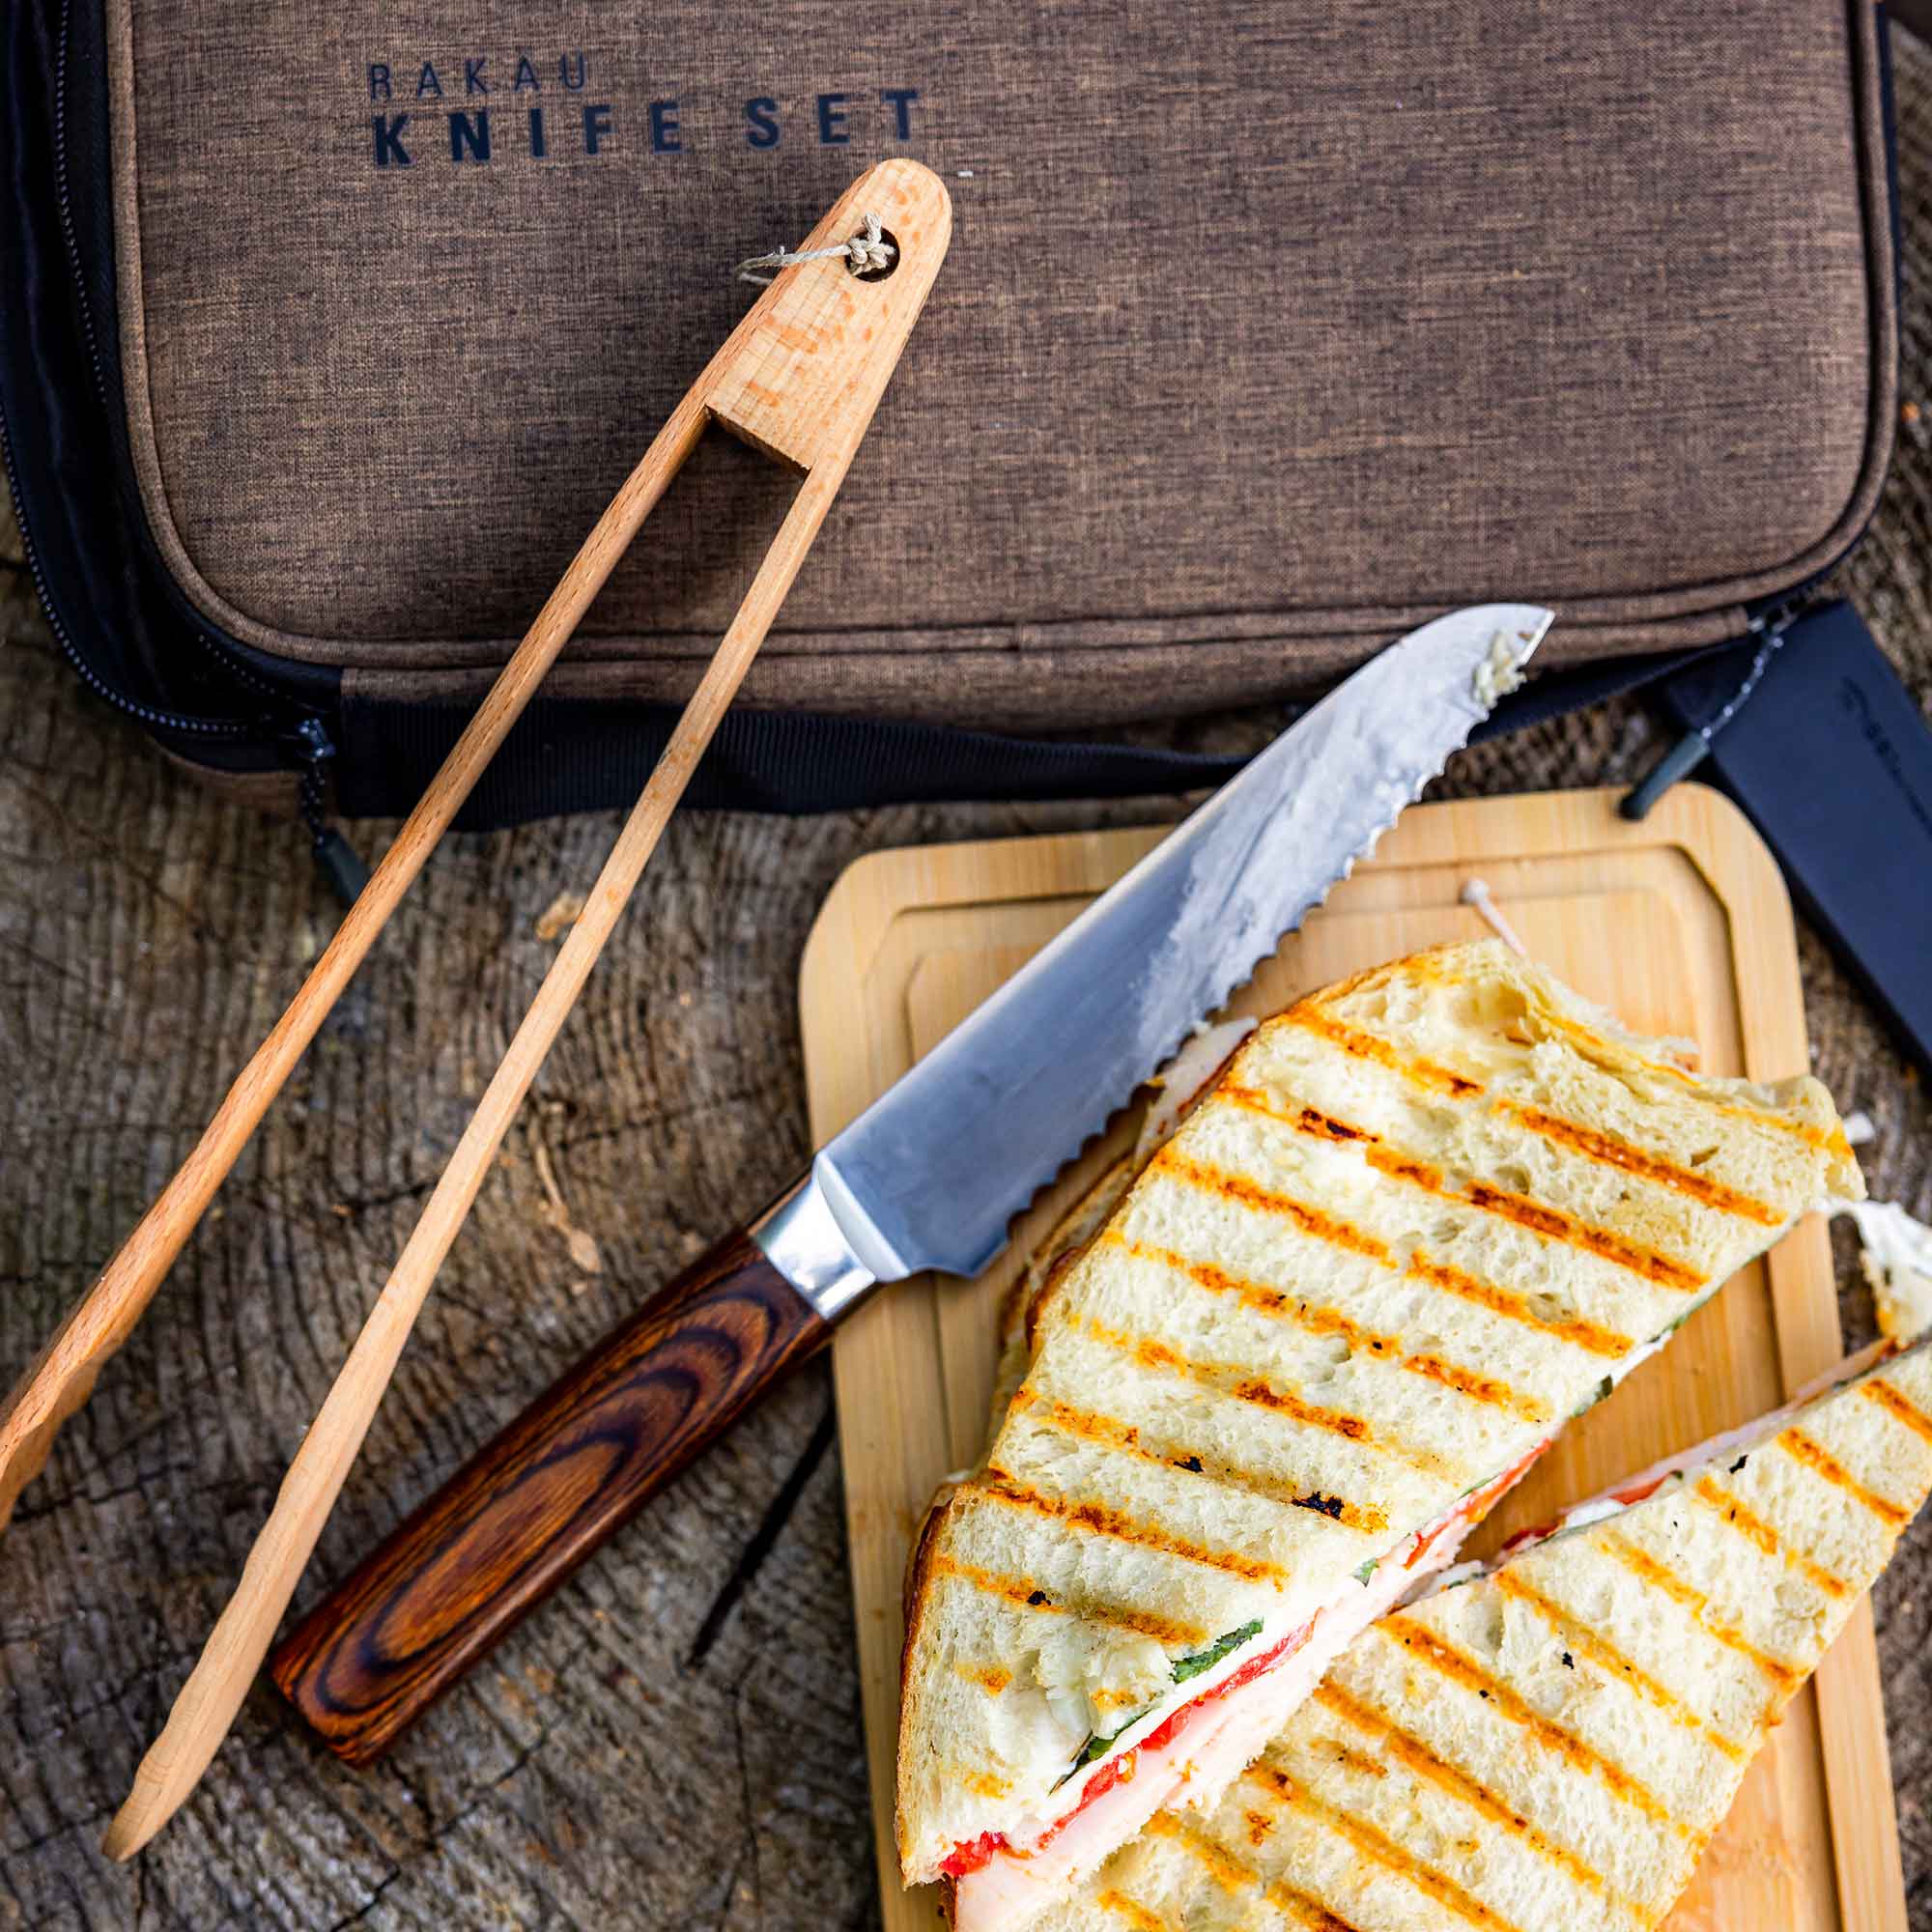 RAKAU Knife Set for Outdoor Cooking | GSI Outdoors